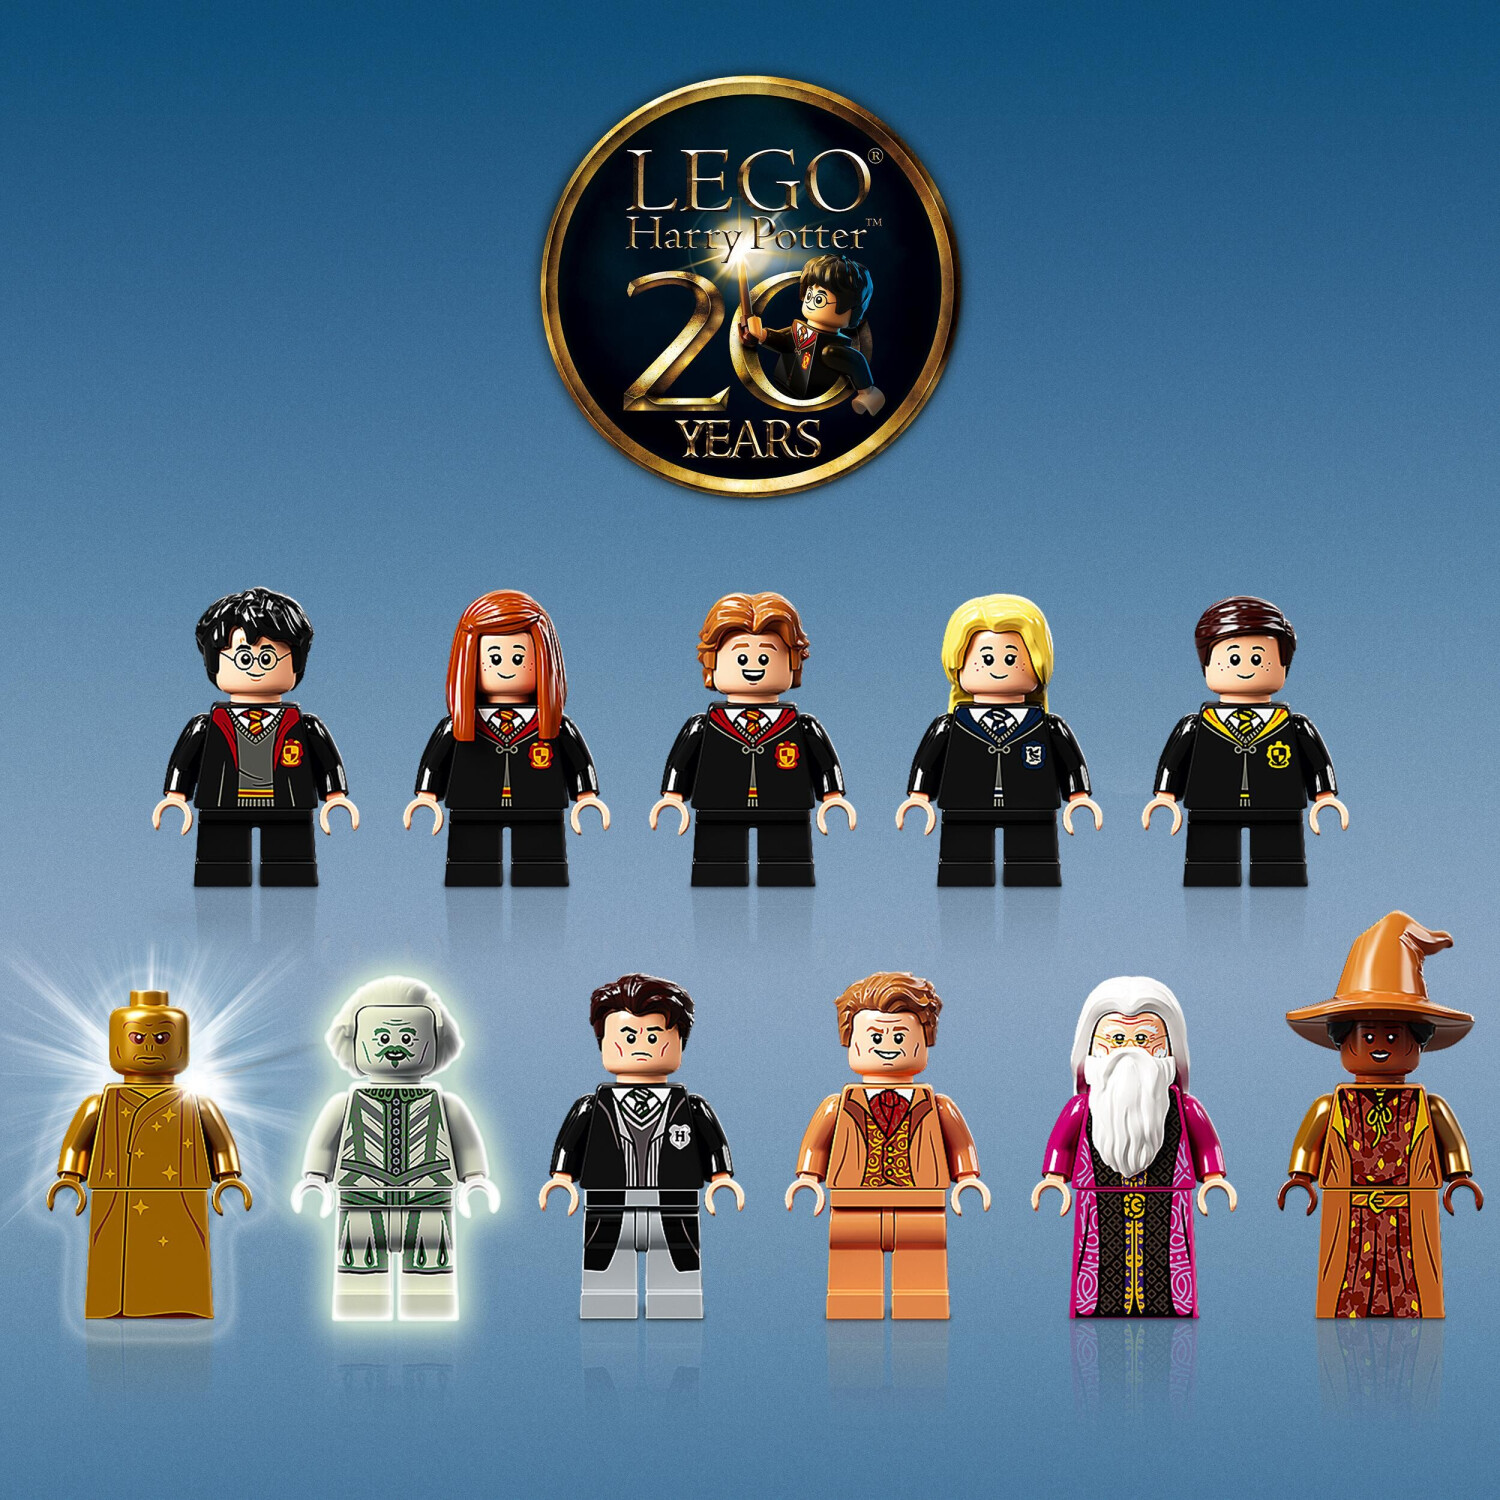 LEGO Harry Potter - Hogwarts: Cámara Secreta (76389) desde 129,99 €